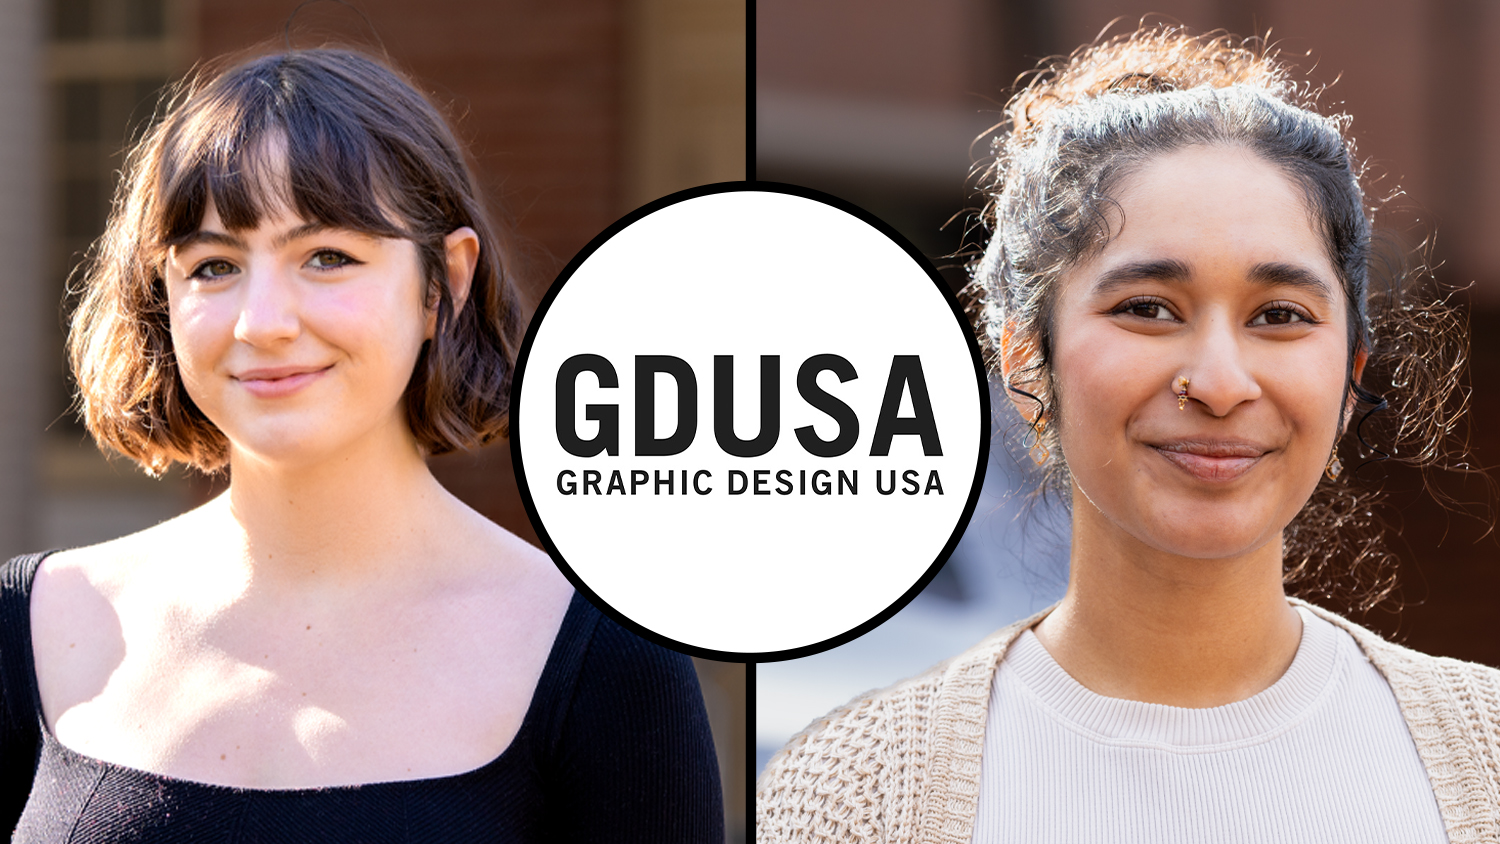 Erin Secosky and Bhavana Veeravalli with GDUSA logo